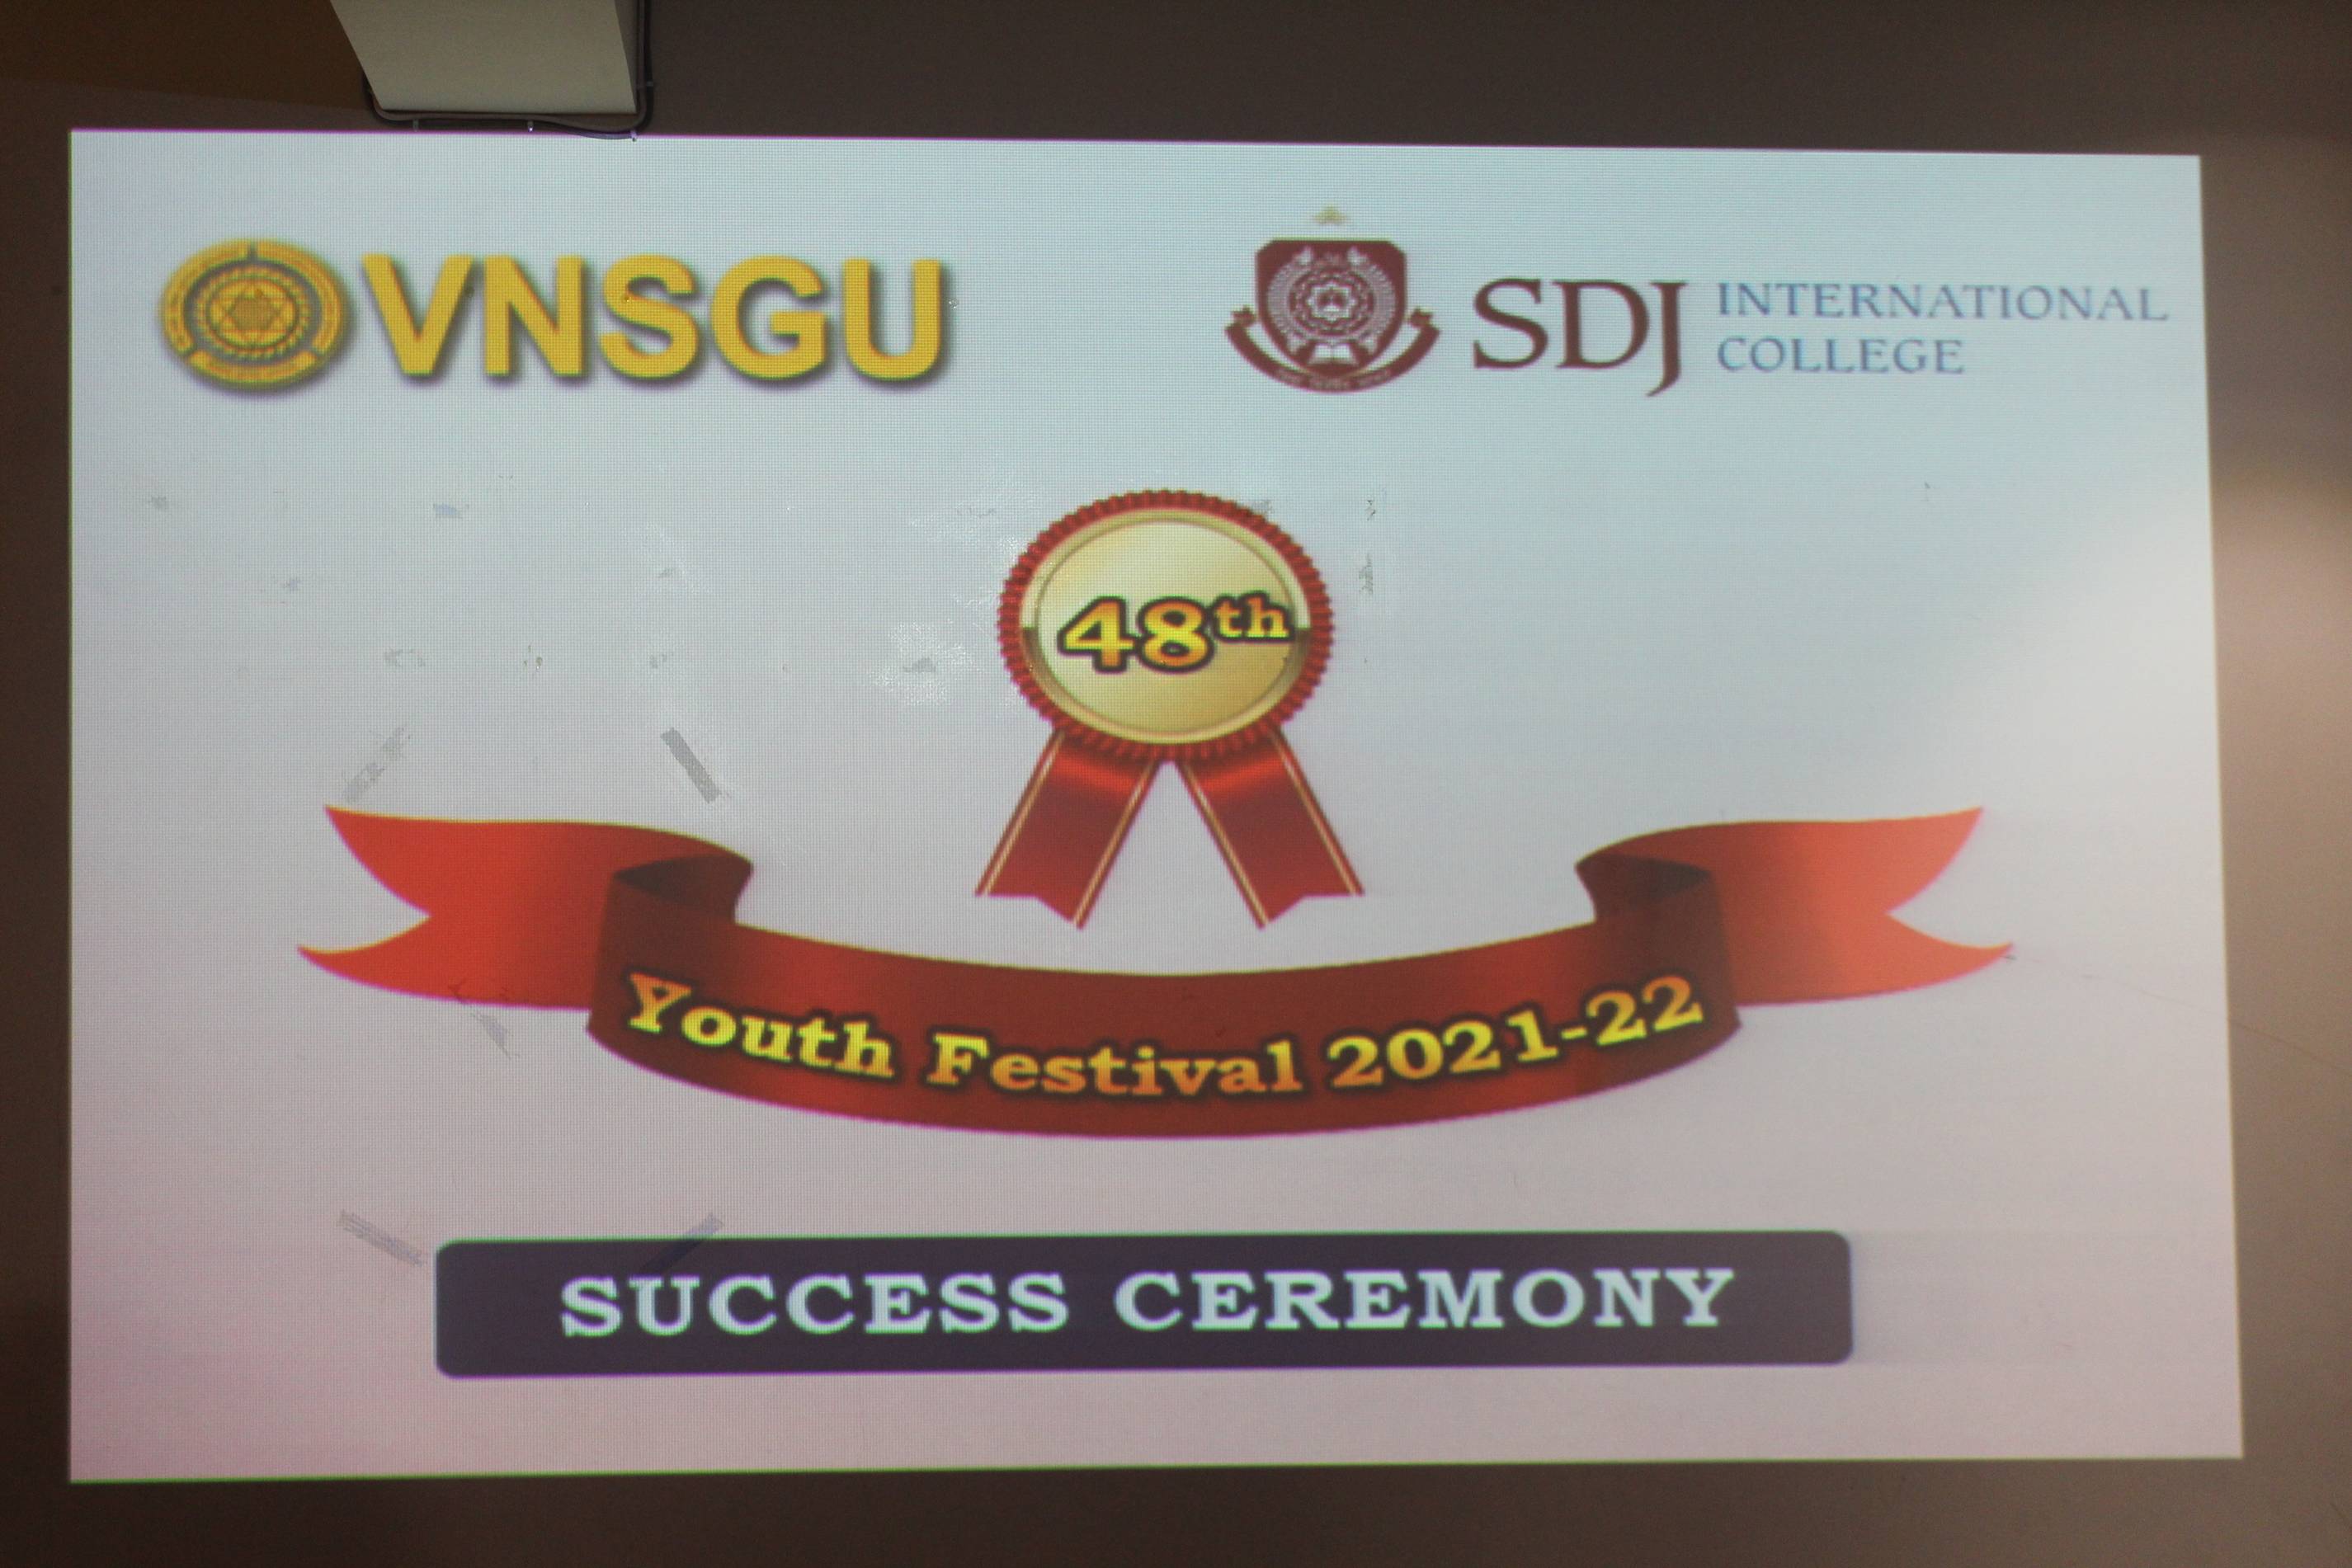 “VNSGU’s 48th Youth Festival – Success Ceremony” organized at SDJ International College, Vesu